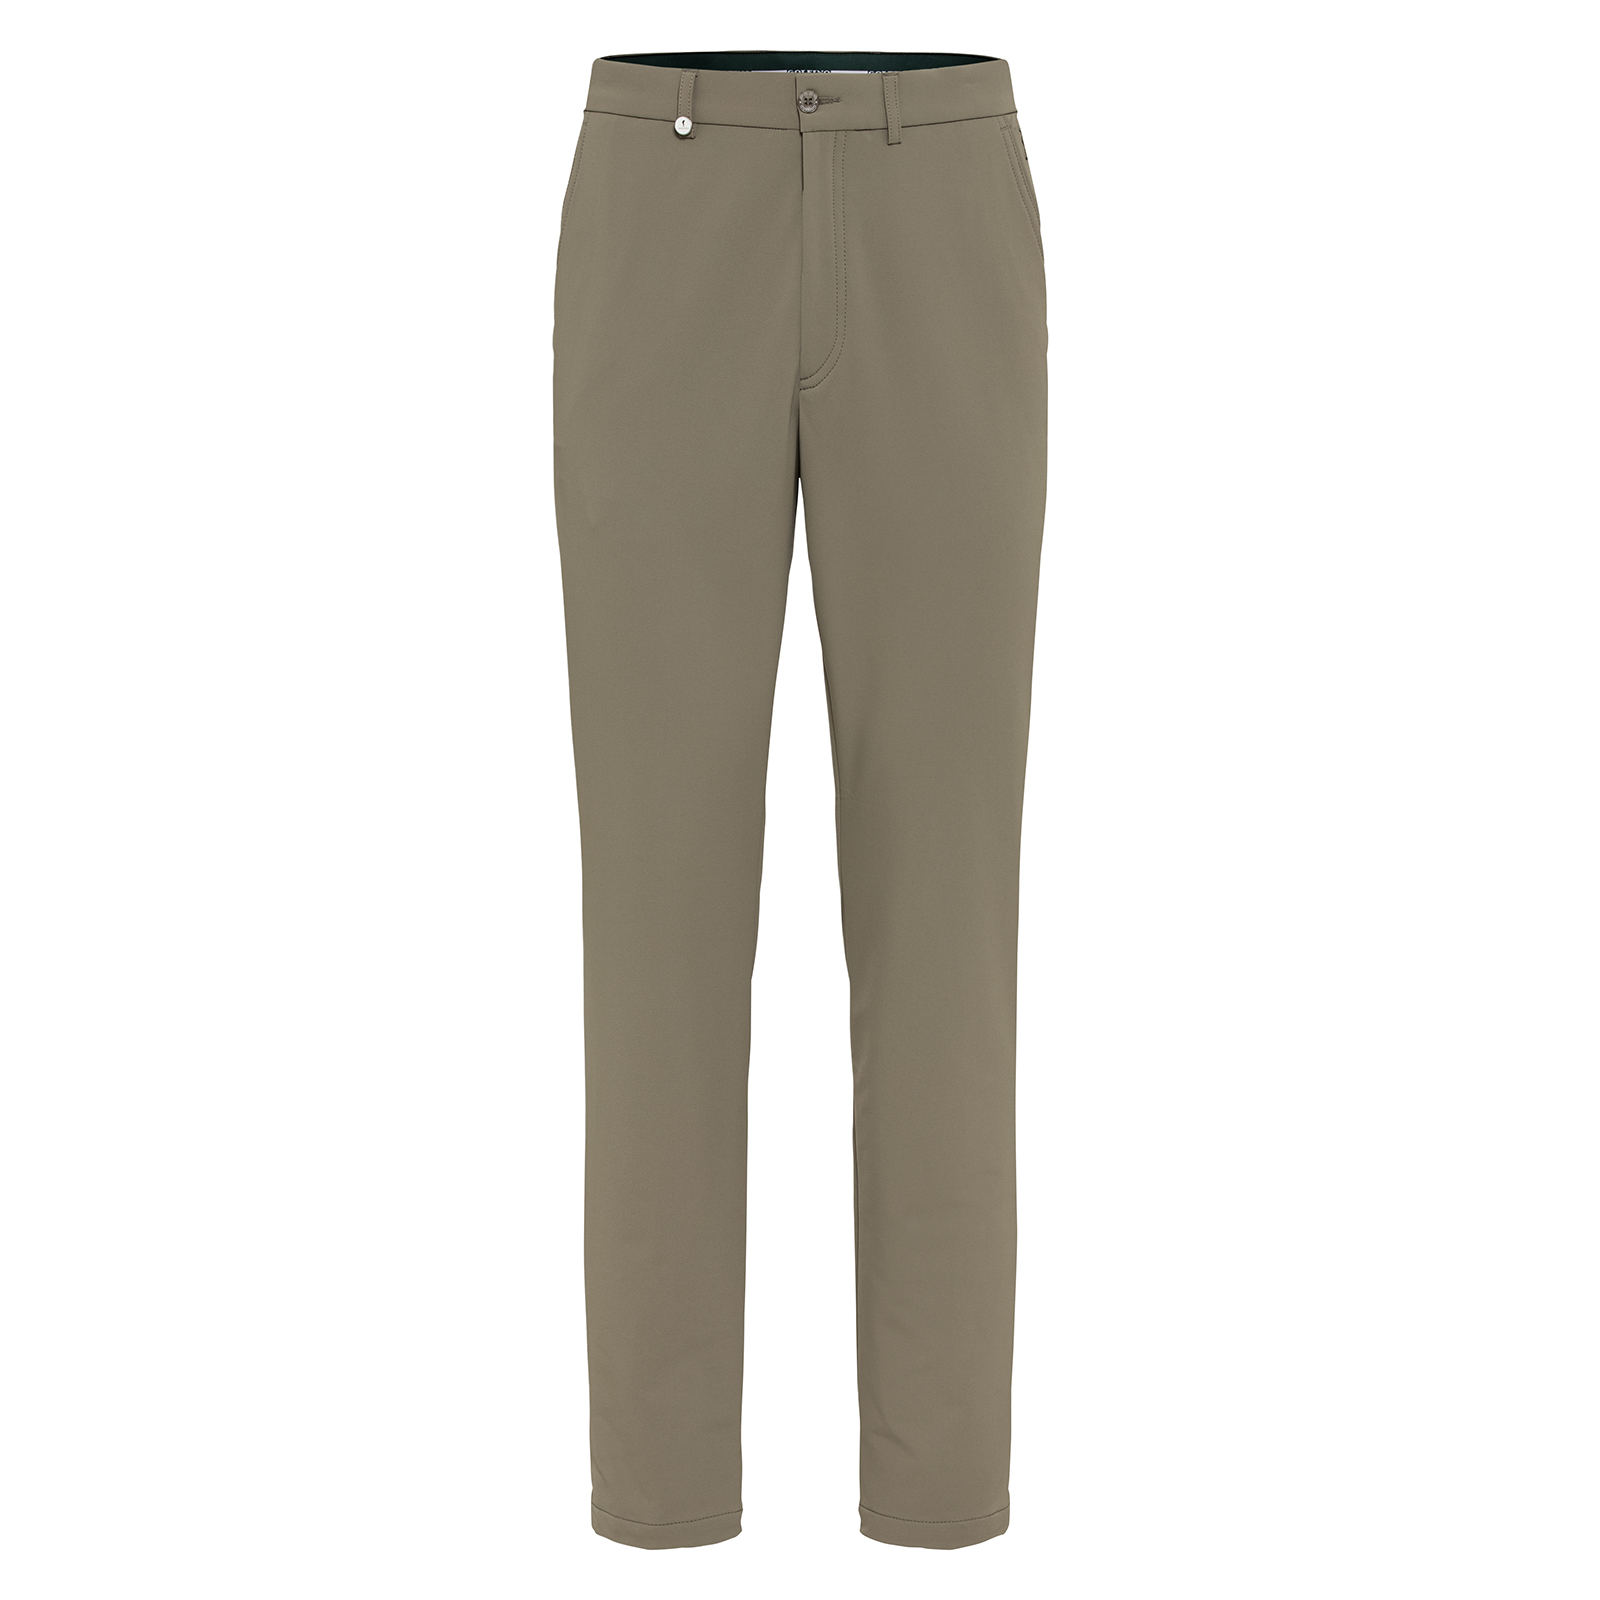 Pantalon de golf sportif Thermo pour homme avec fonction stretch 4 Way extensible